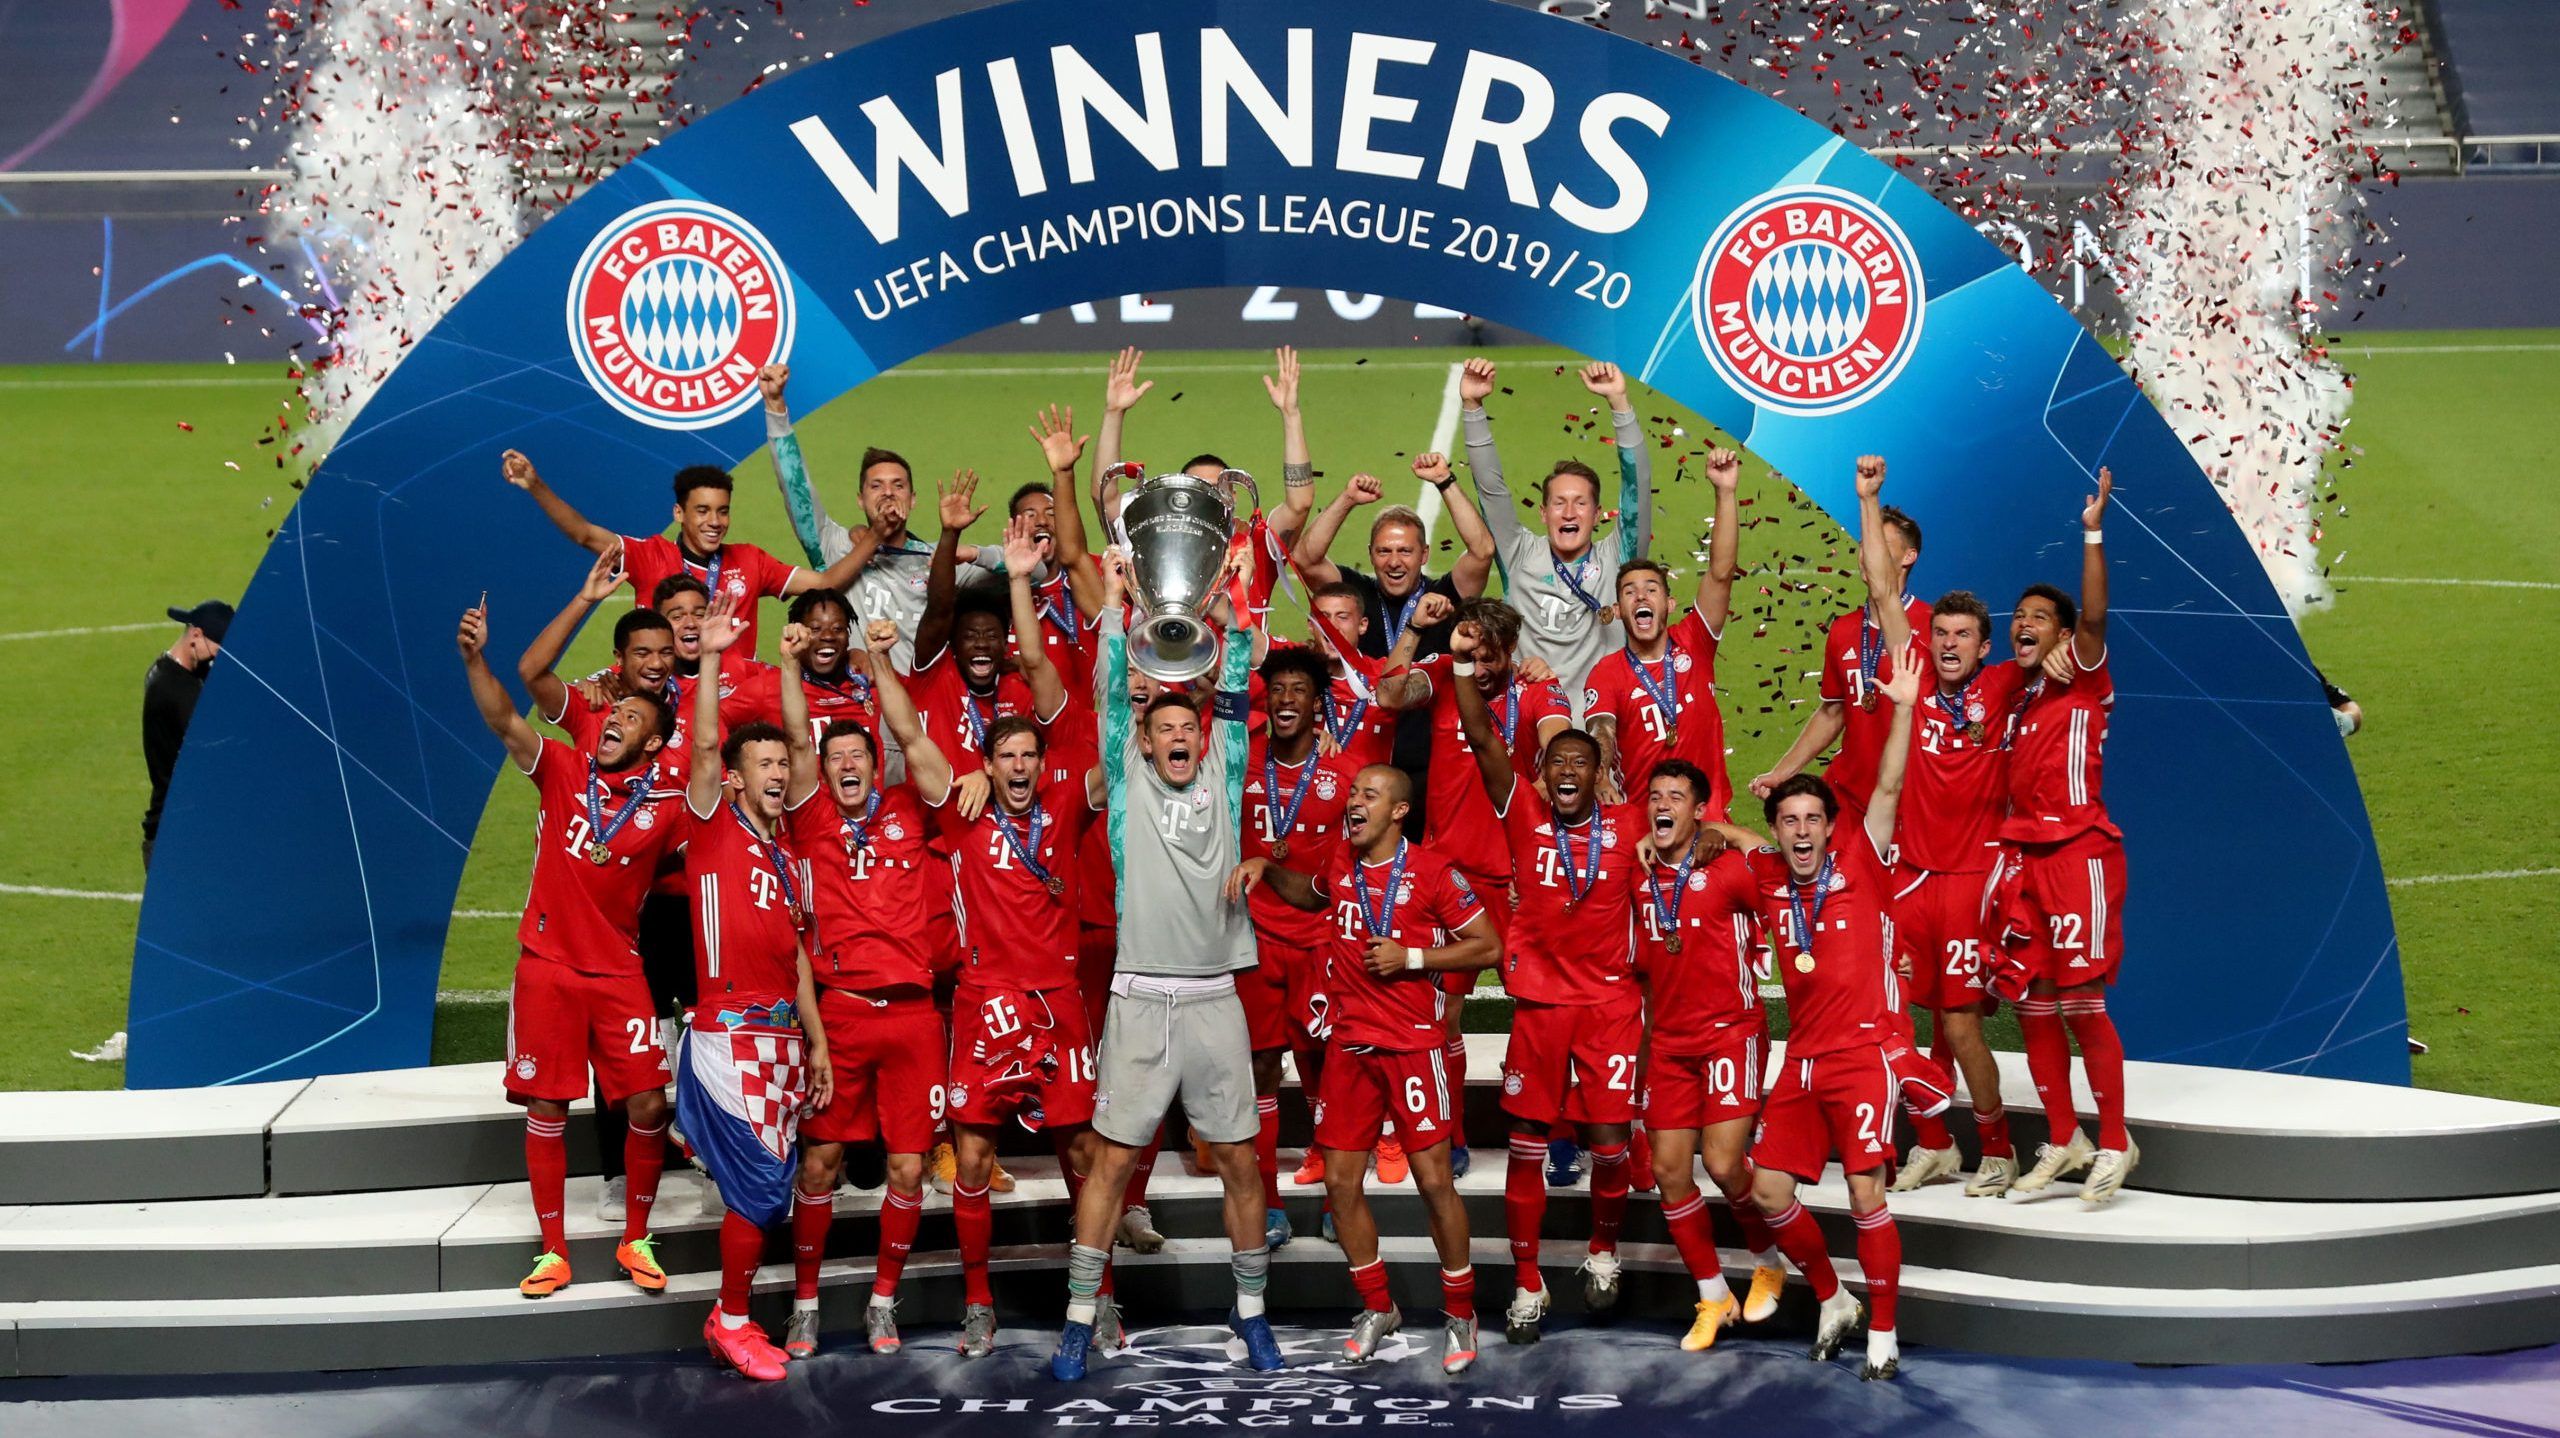 Bundesliga. Bayern Munich seal treble with UEFA Champions League